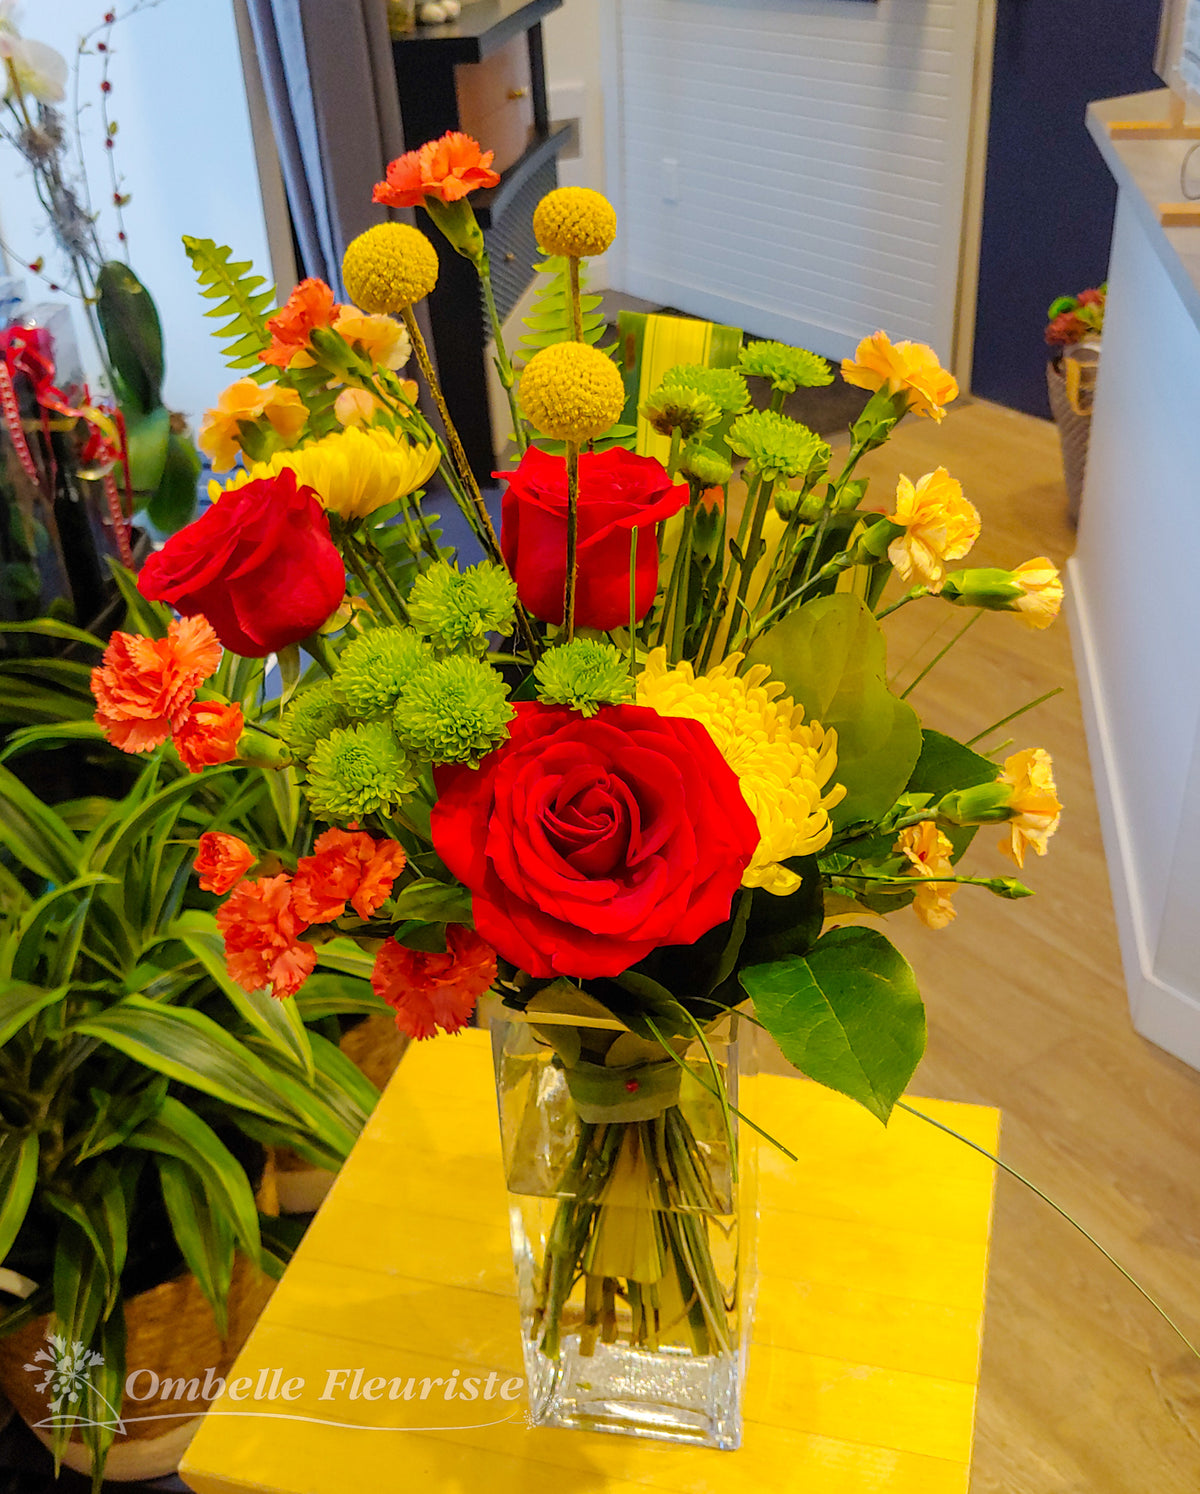 Ombelle Fleuriste - Bouquet de fleurs Miranda